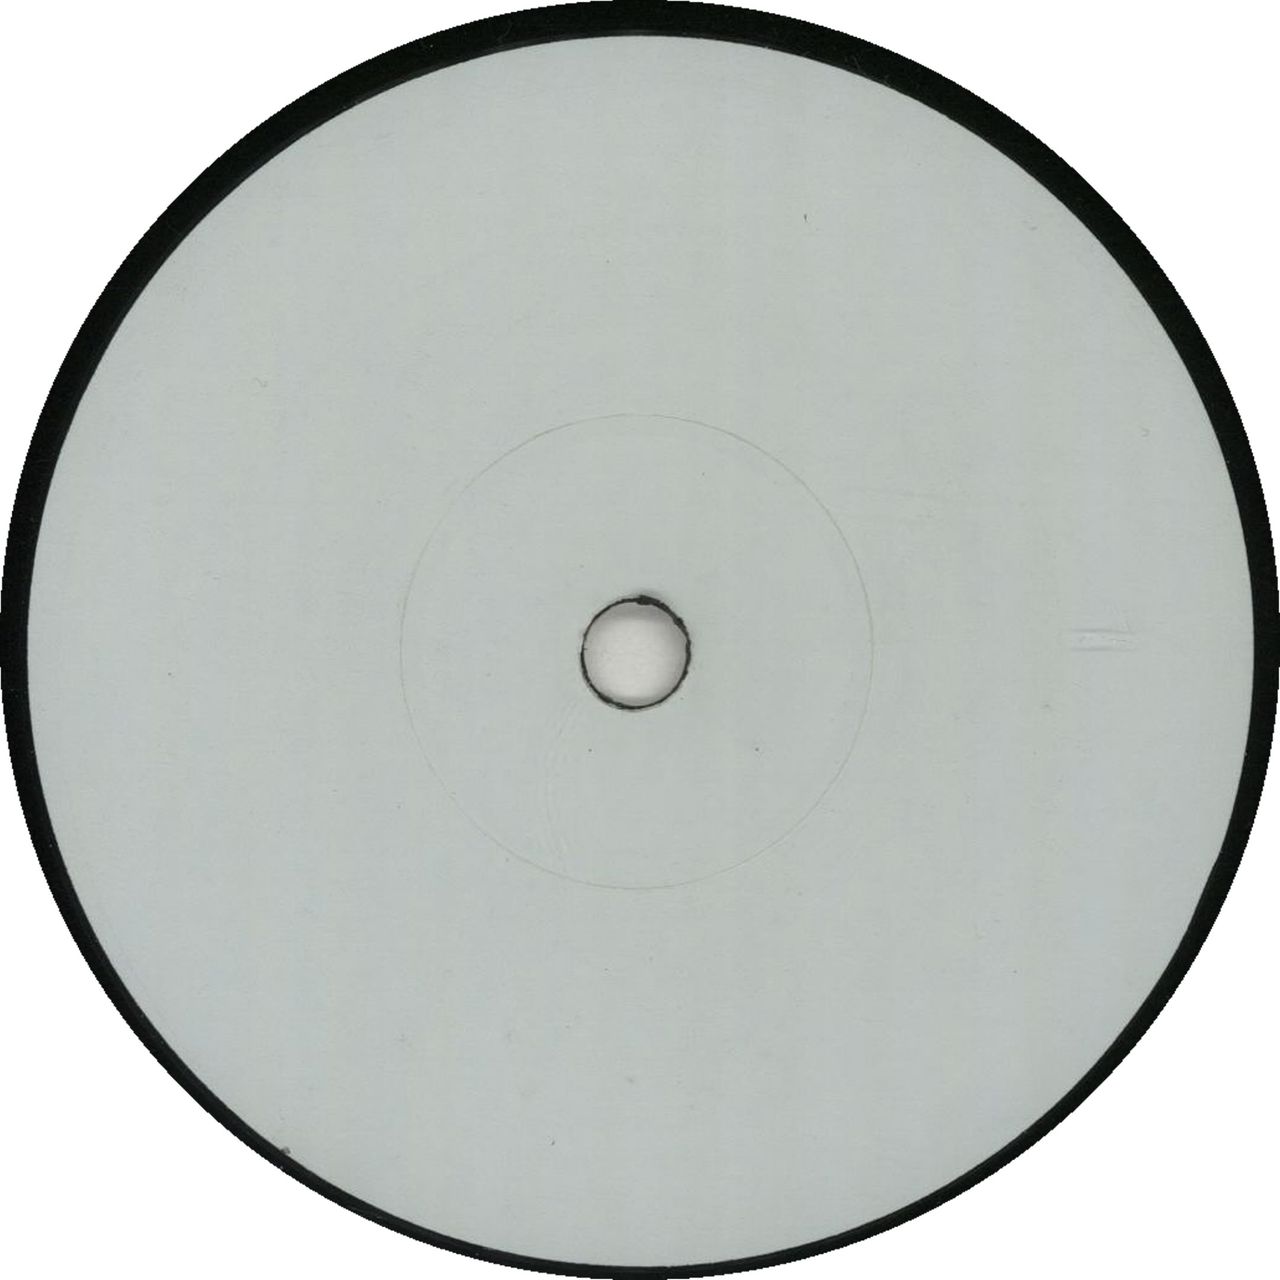 mod Peer Glat We Know Where You Live Draped - White label test pressing UK 7" vinyl —  RareVinyl.com